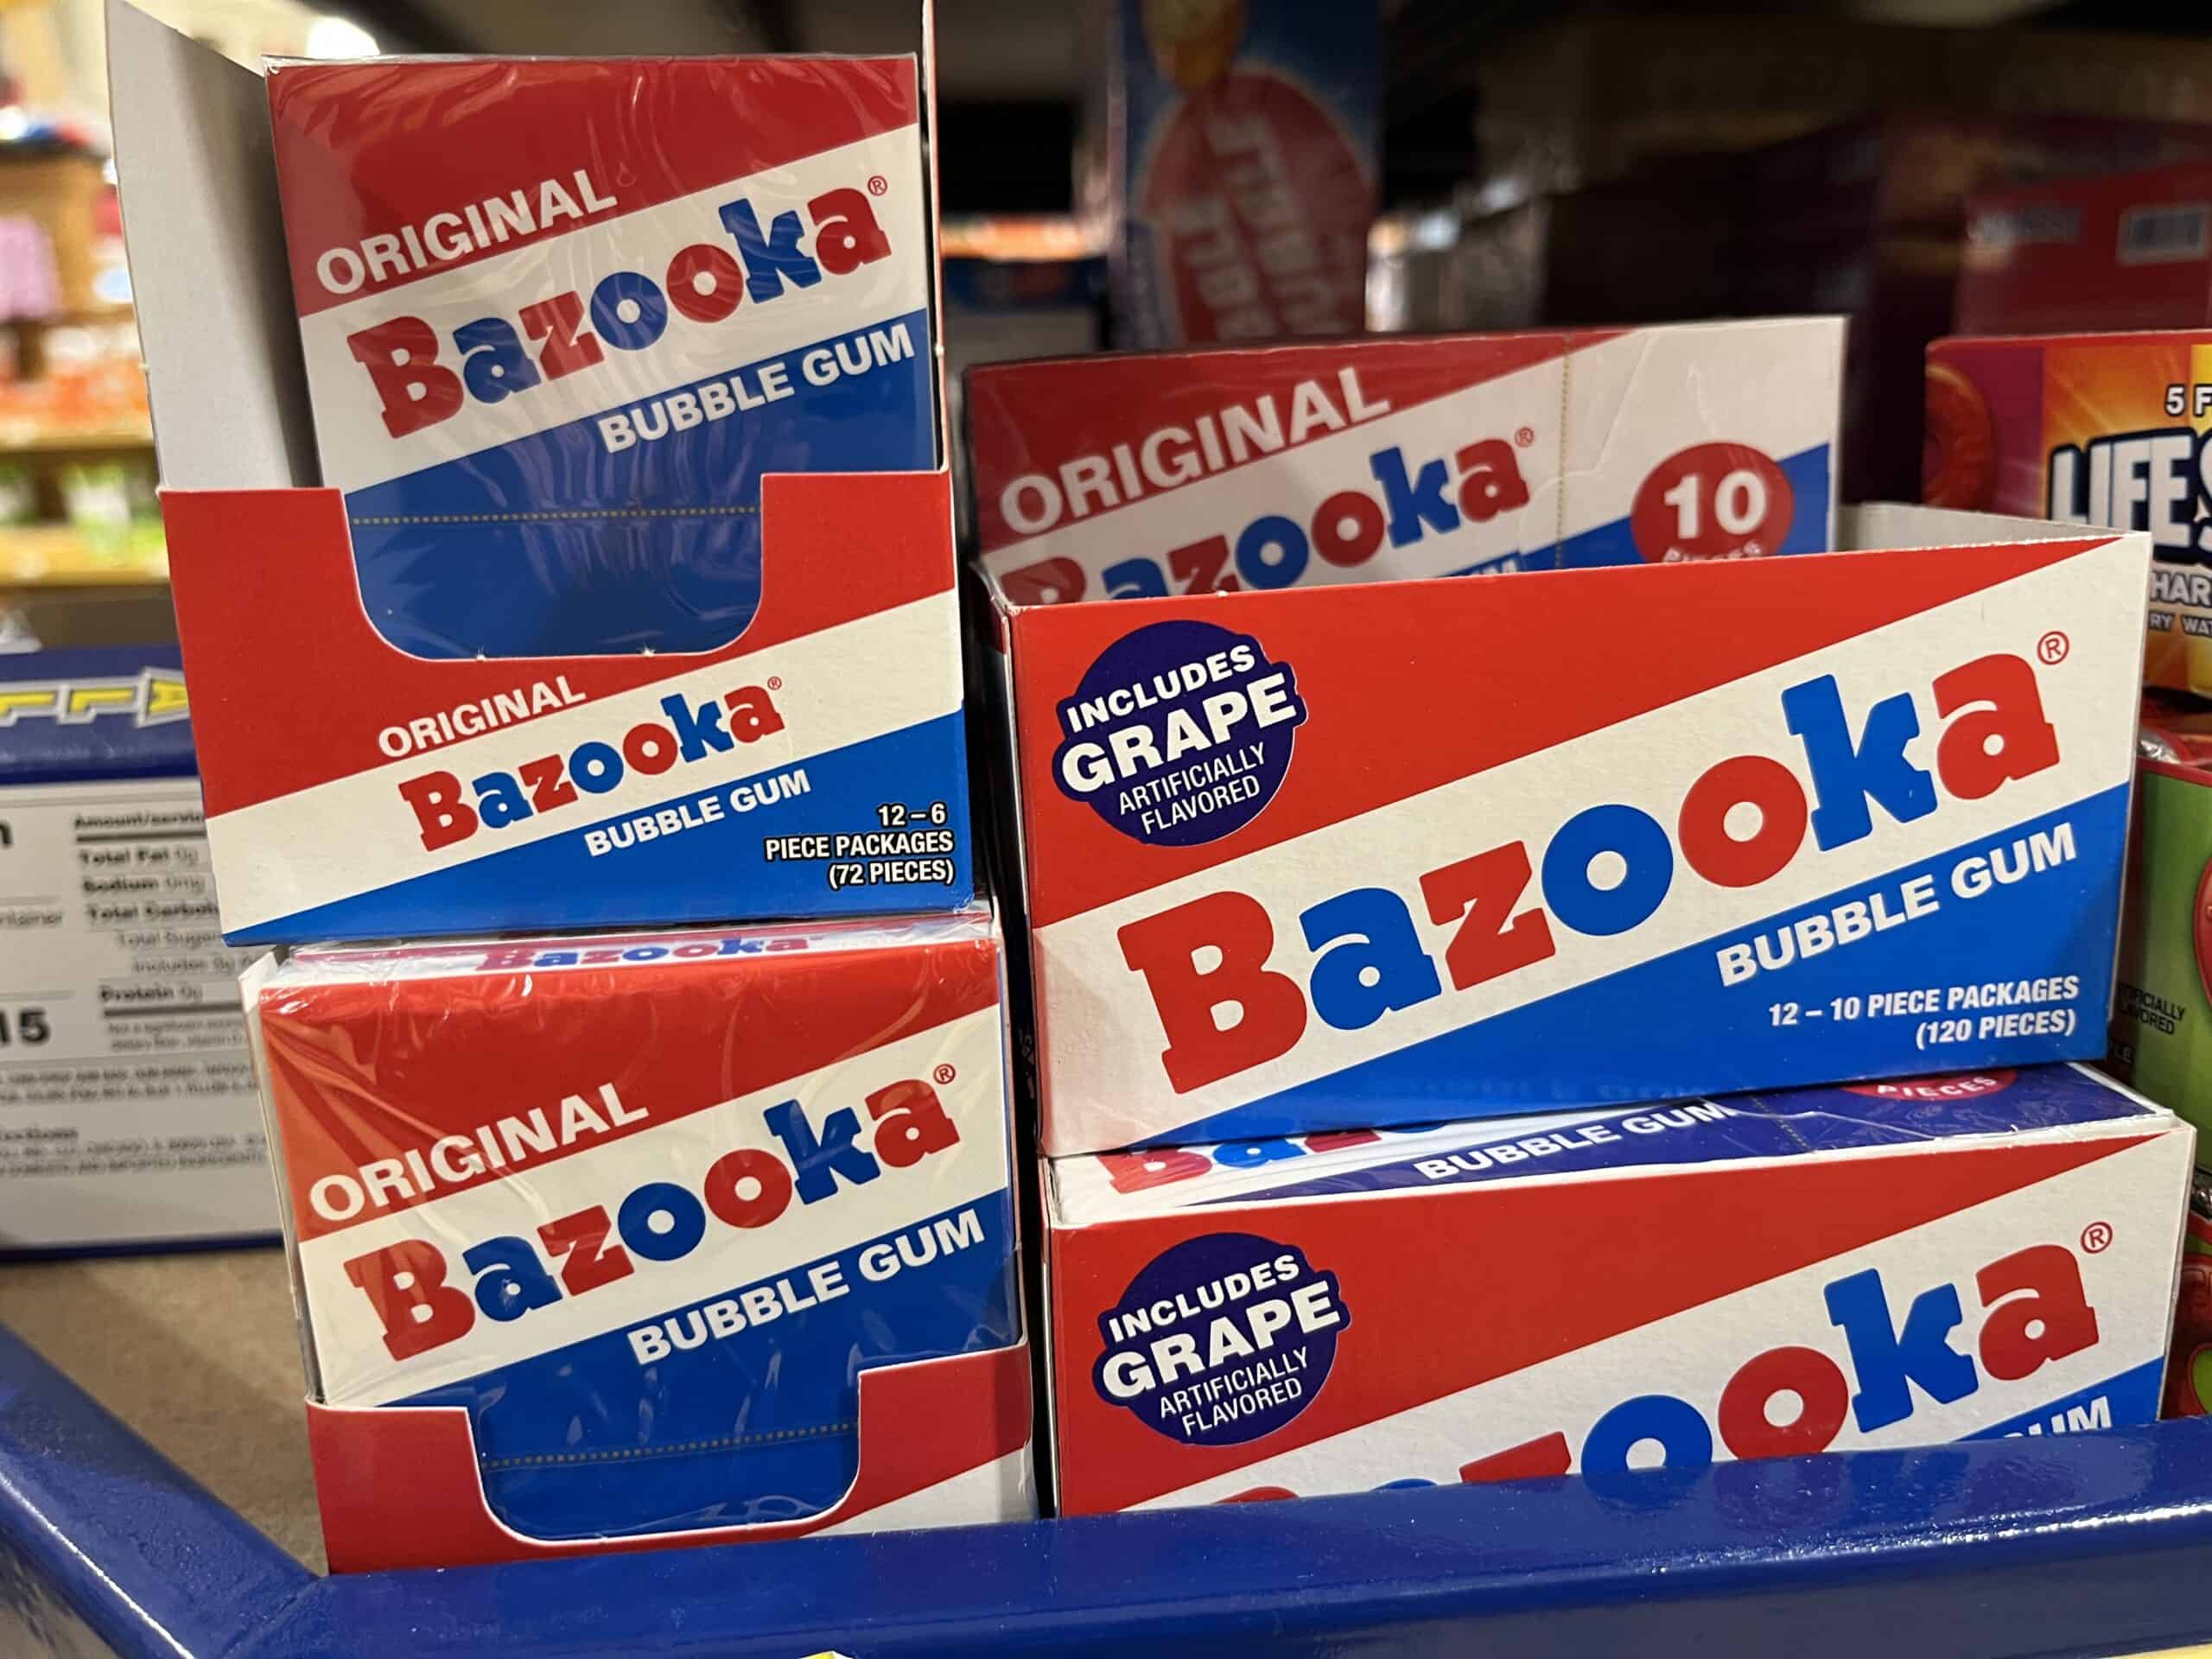 Bazooka gum